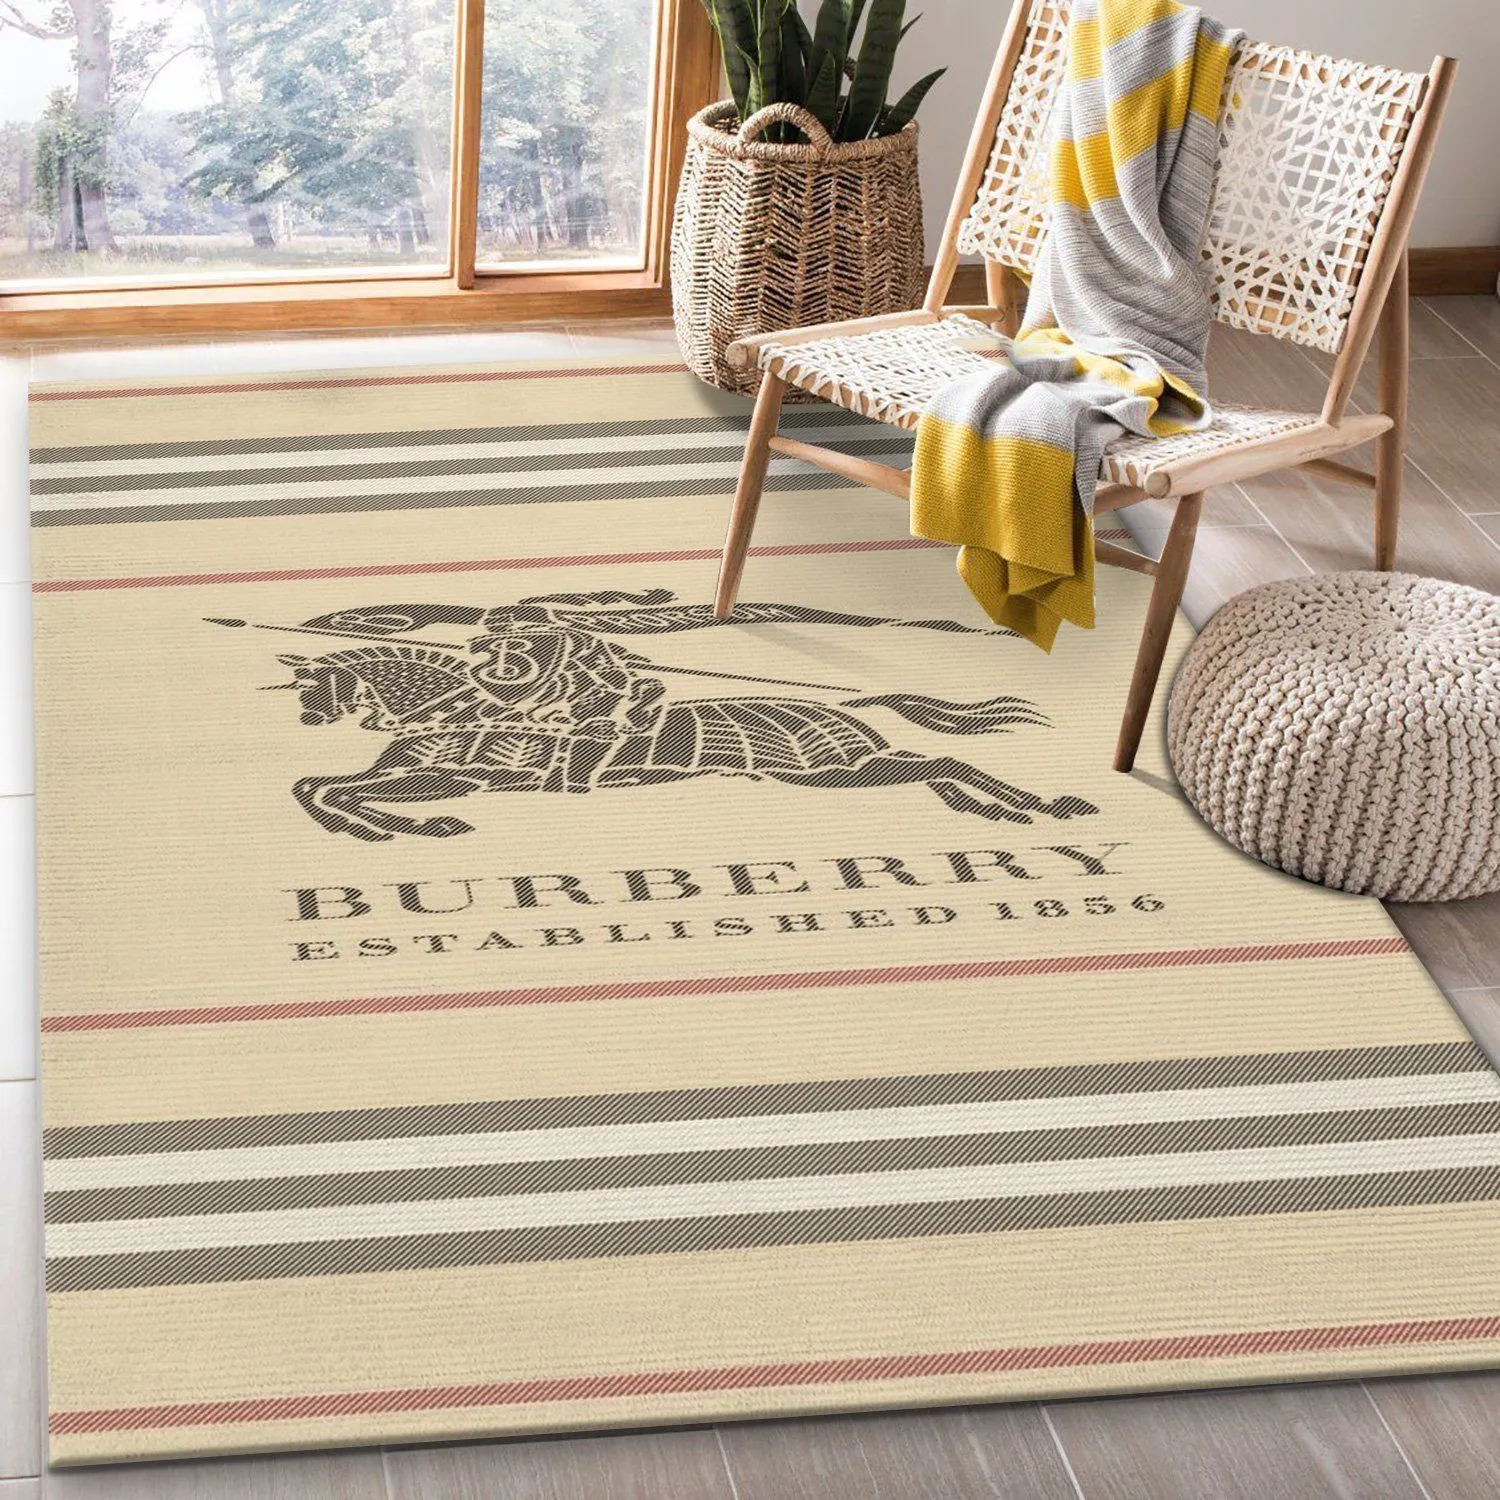 Burberry Rectangle Rug Door Mat Home Decor Luxury Fashion Brand Area Carpet